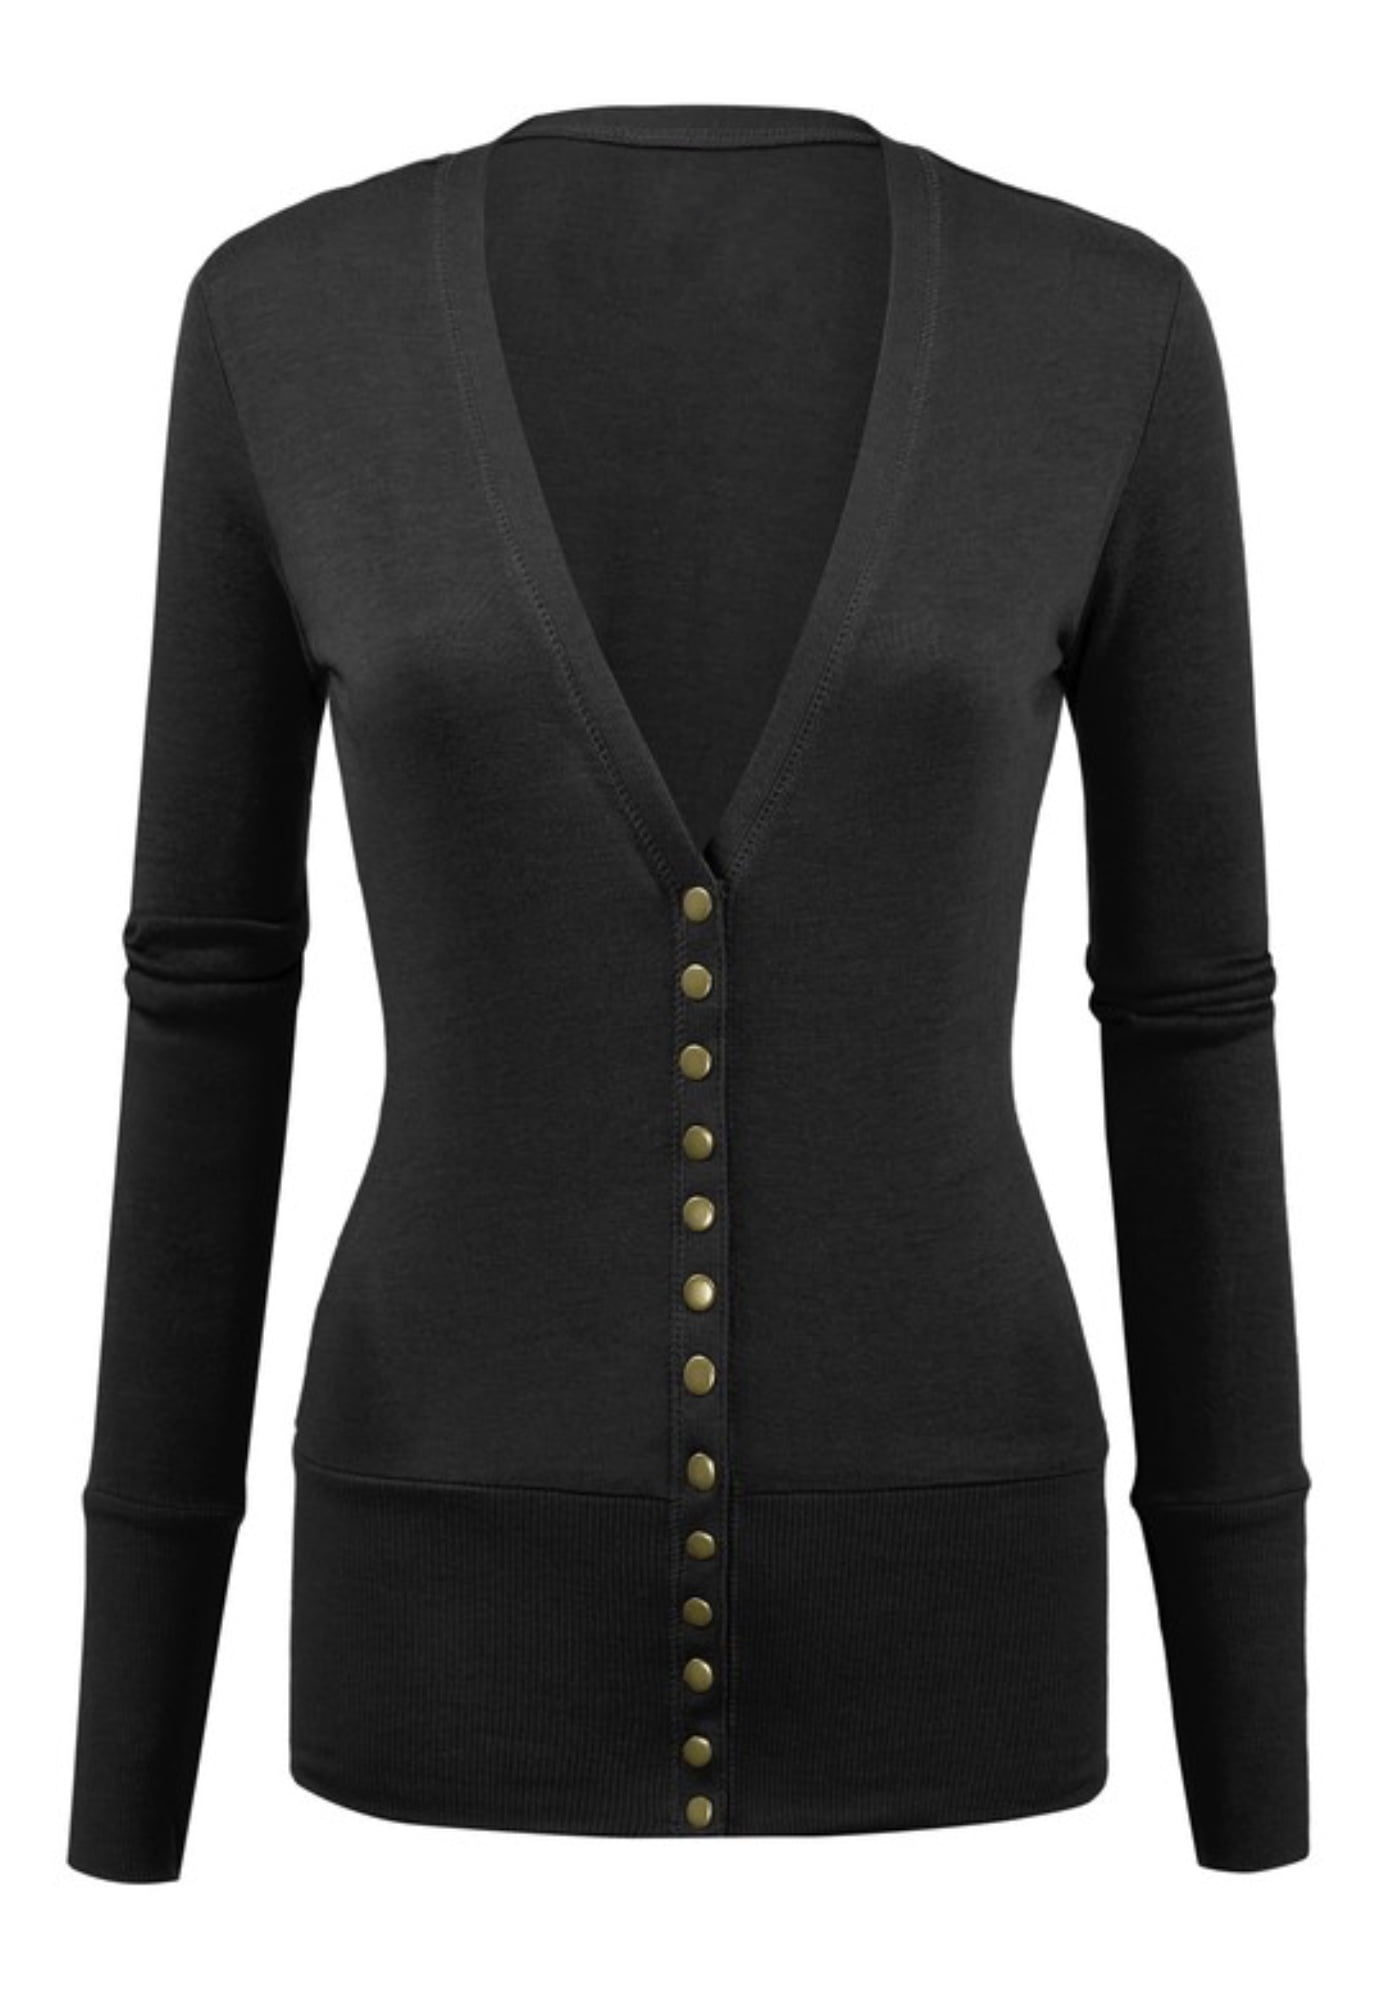 ClothingAve. Women's Long Sleeve Snap Button Cardigan Female Cardigan ...